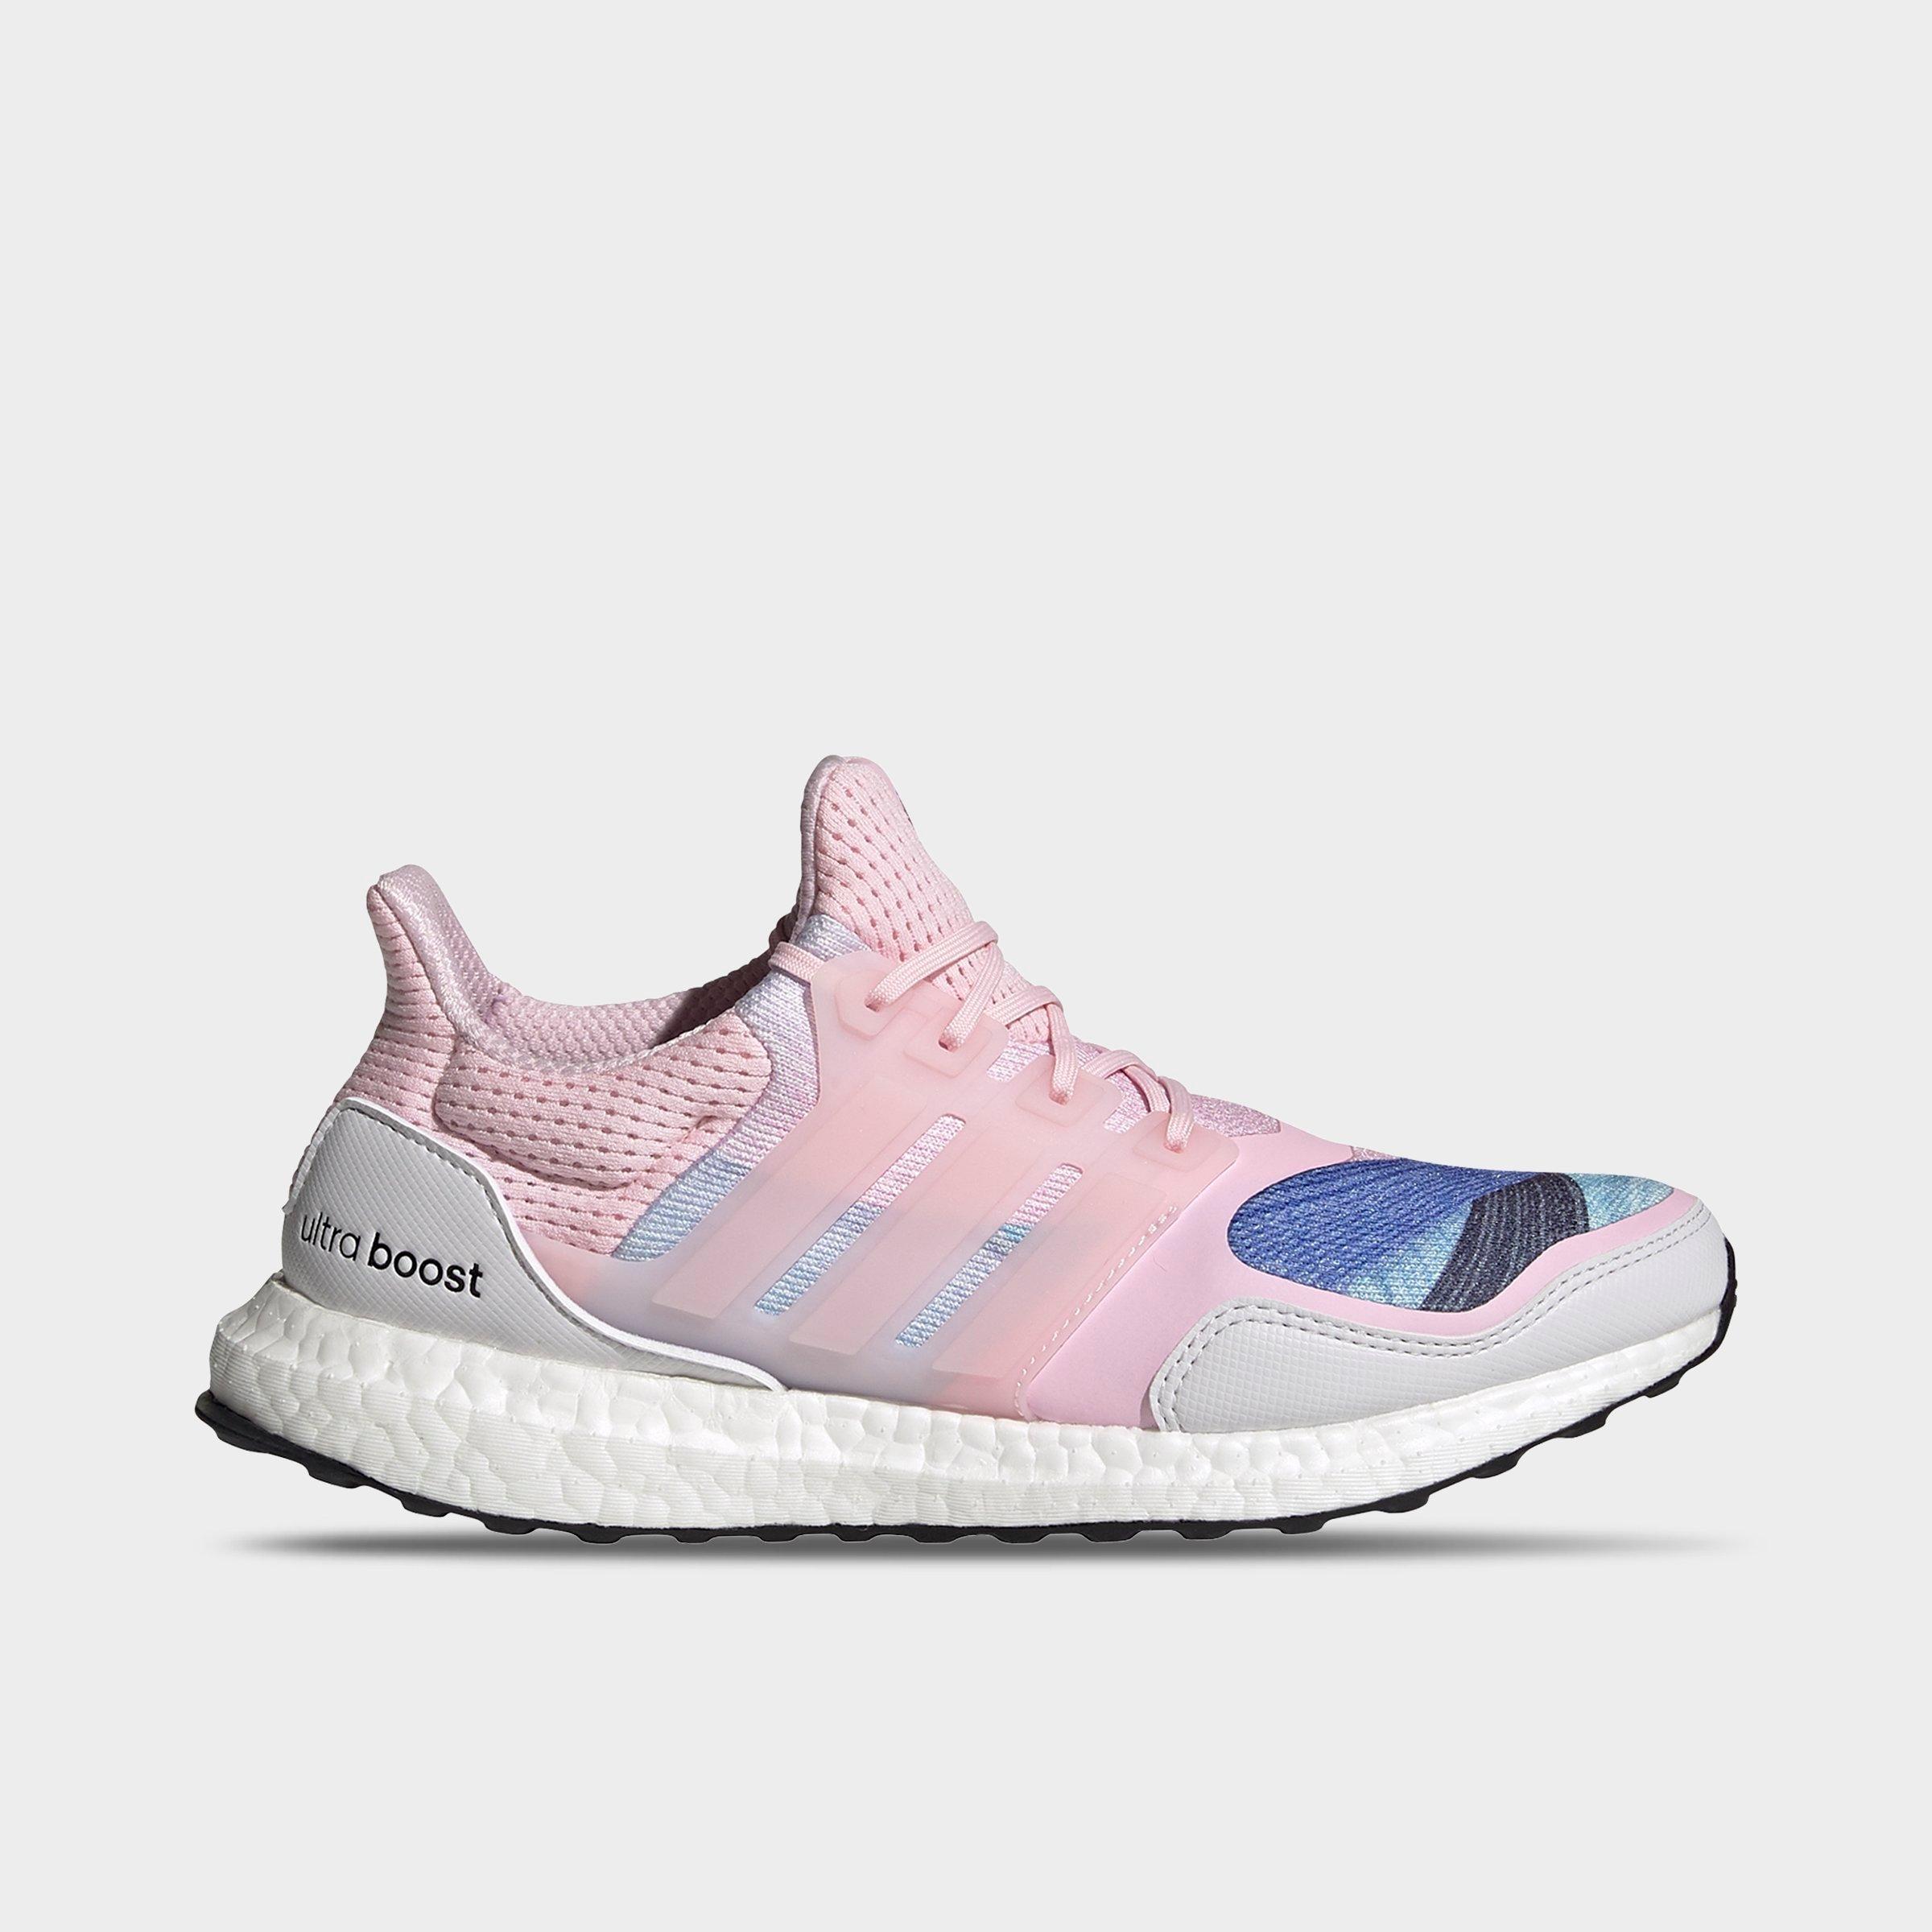 finish line pink adidas